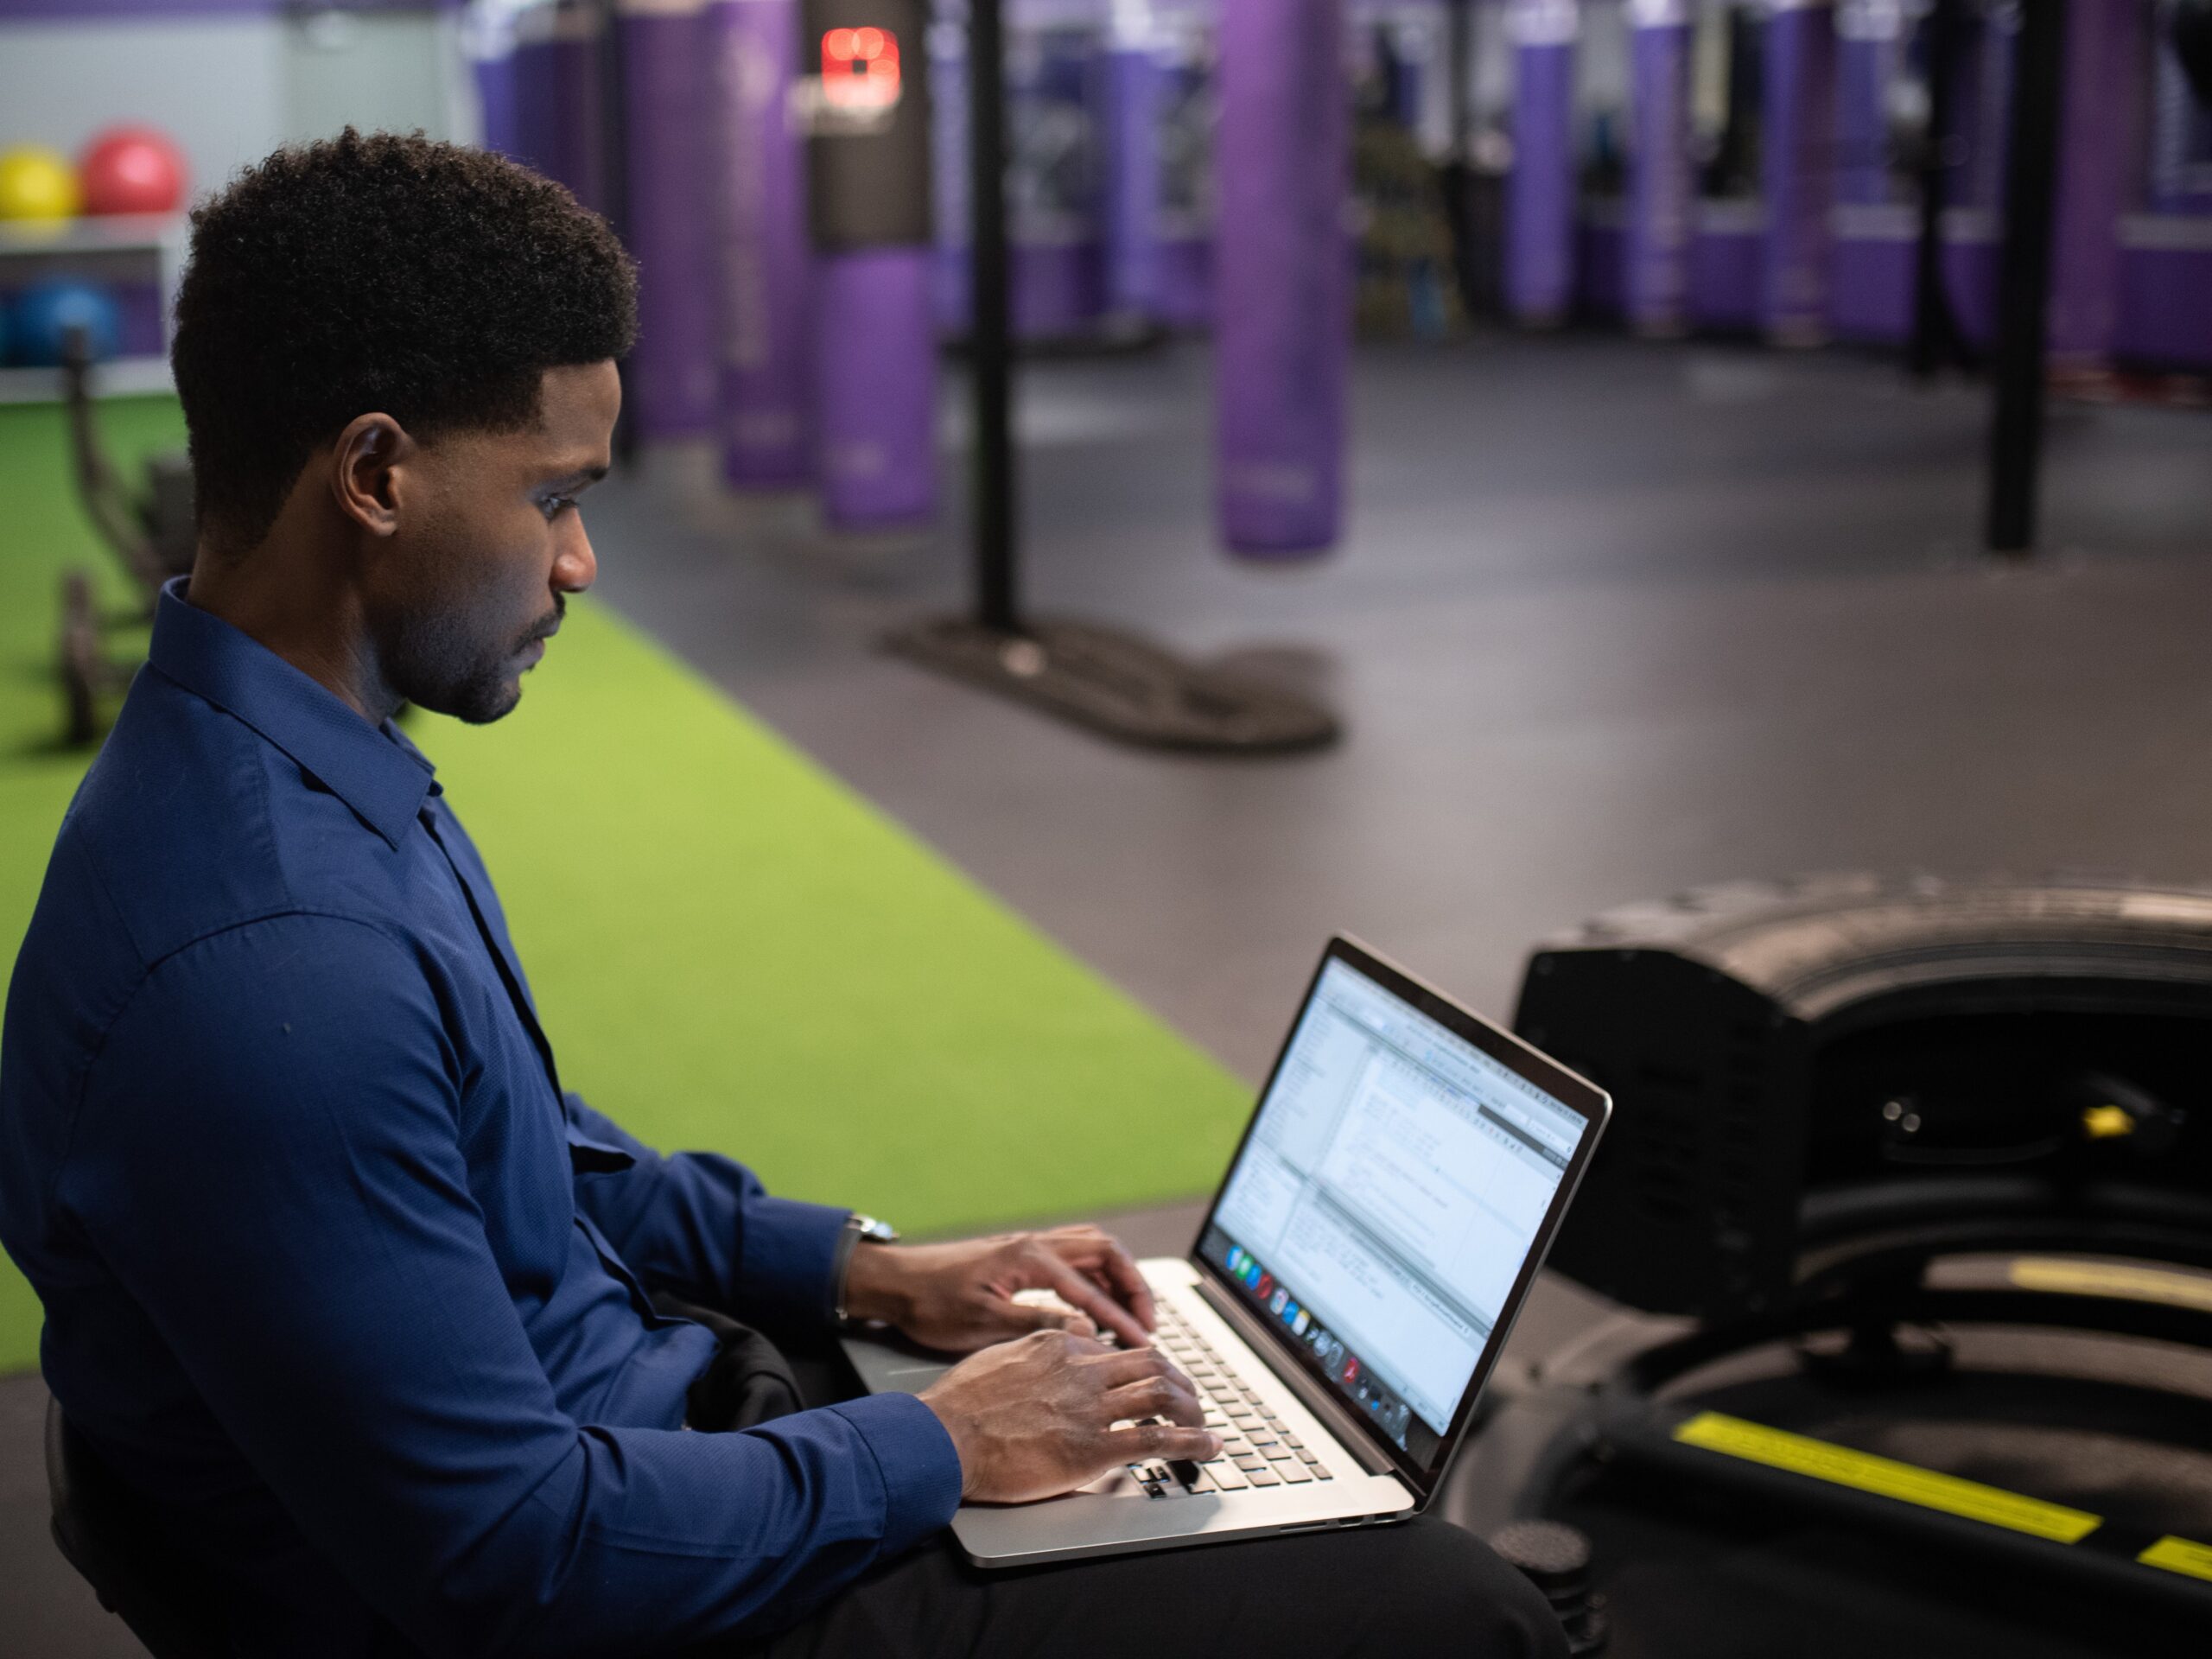 Man sitting in gym using a laptop.